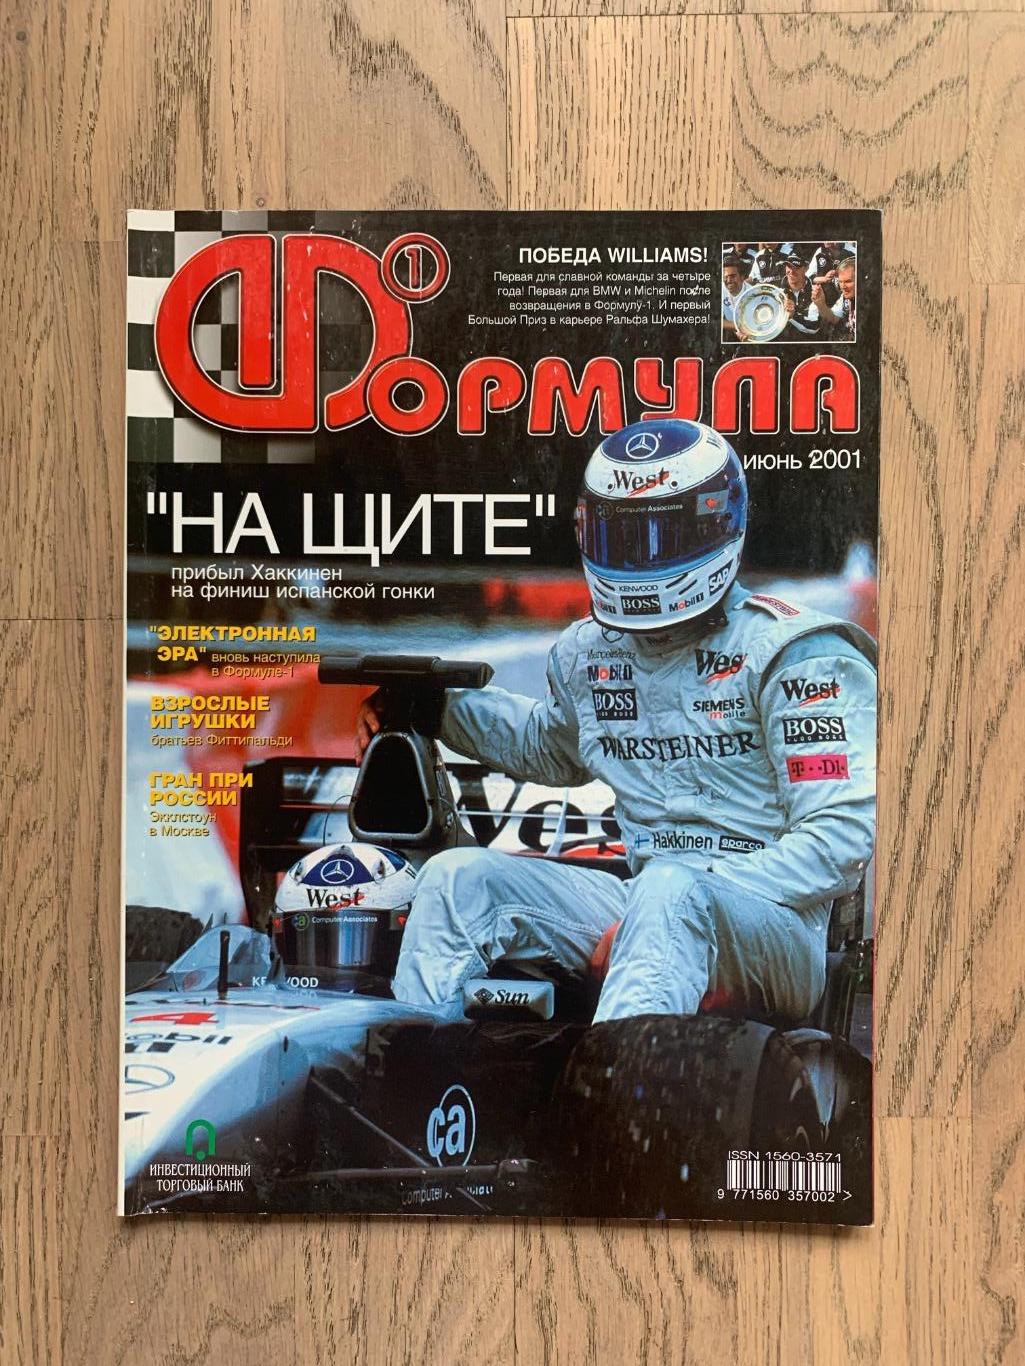 Журнал Формула 1 (Formula Magazine) / июнь 2001